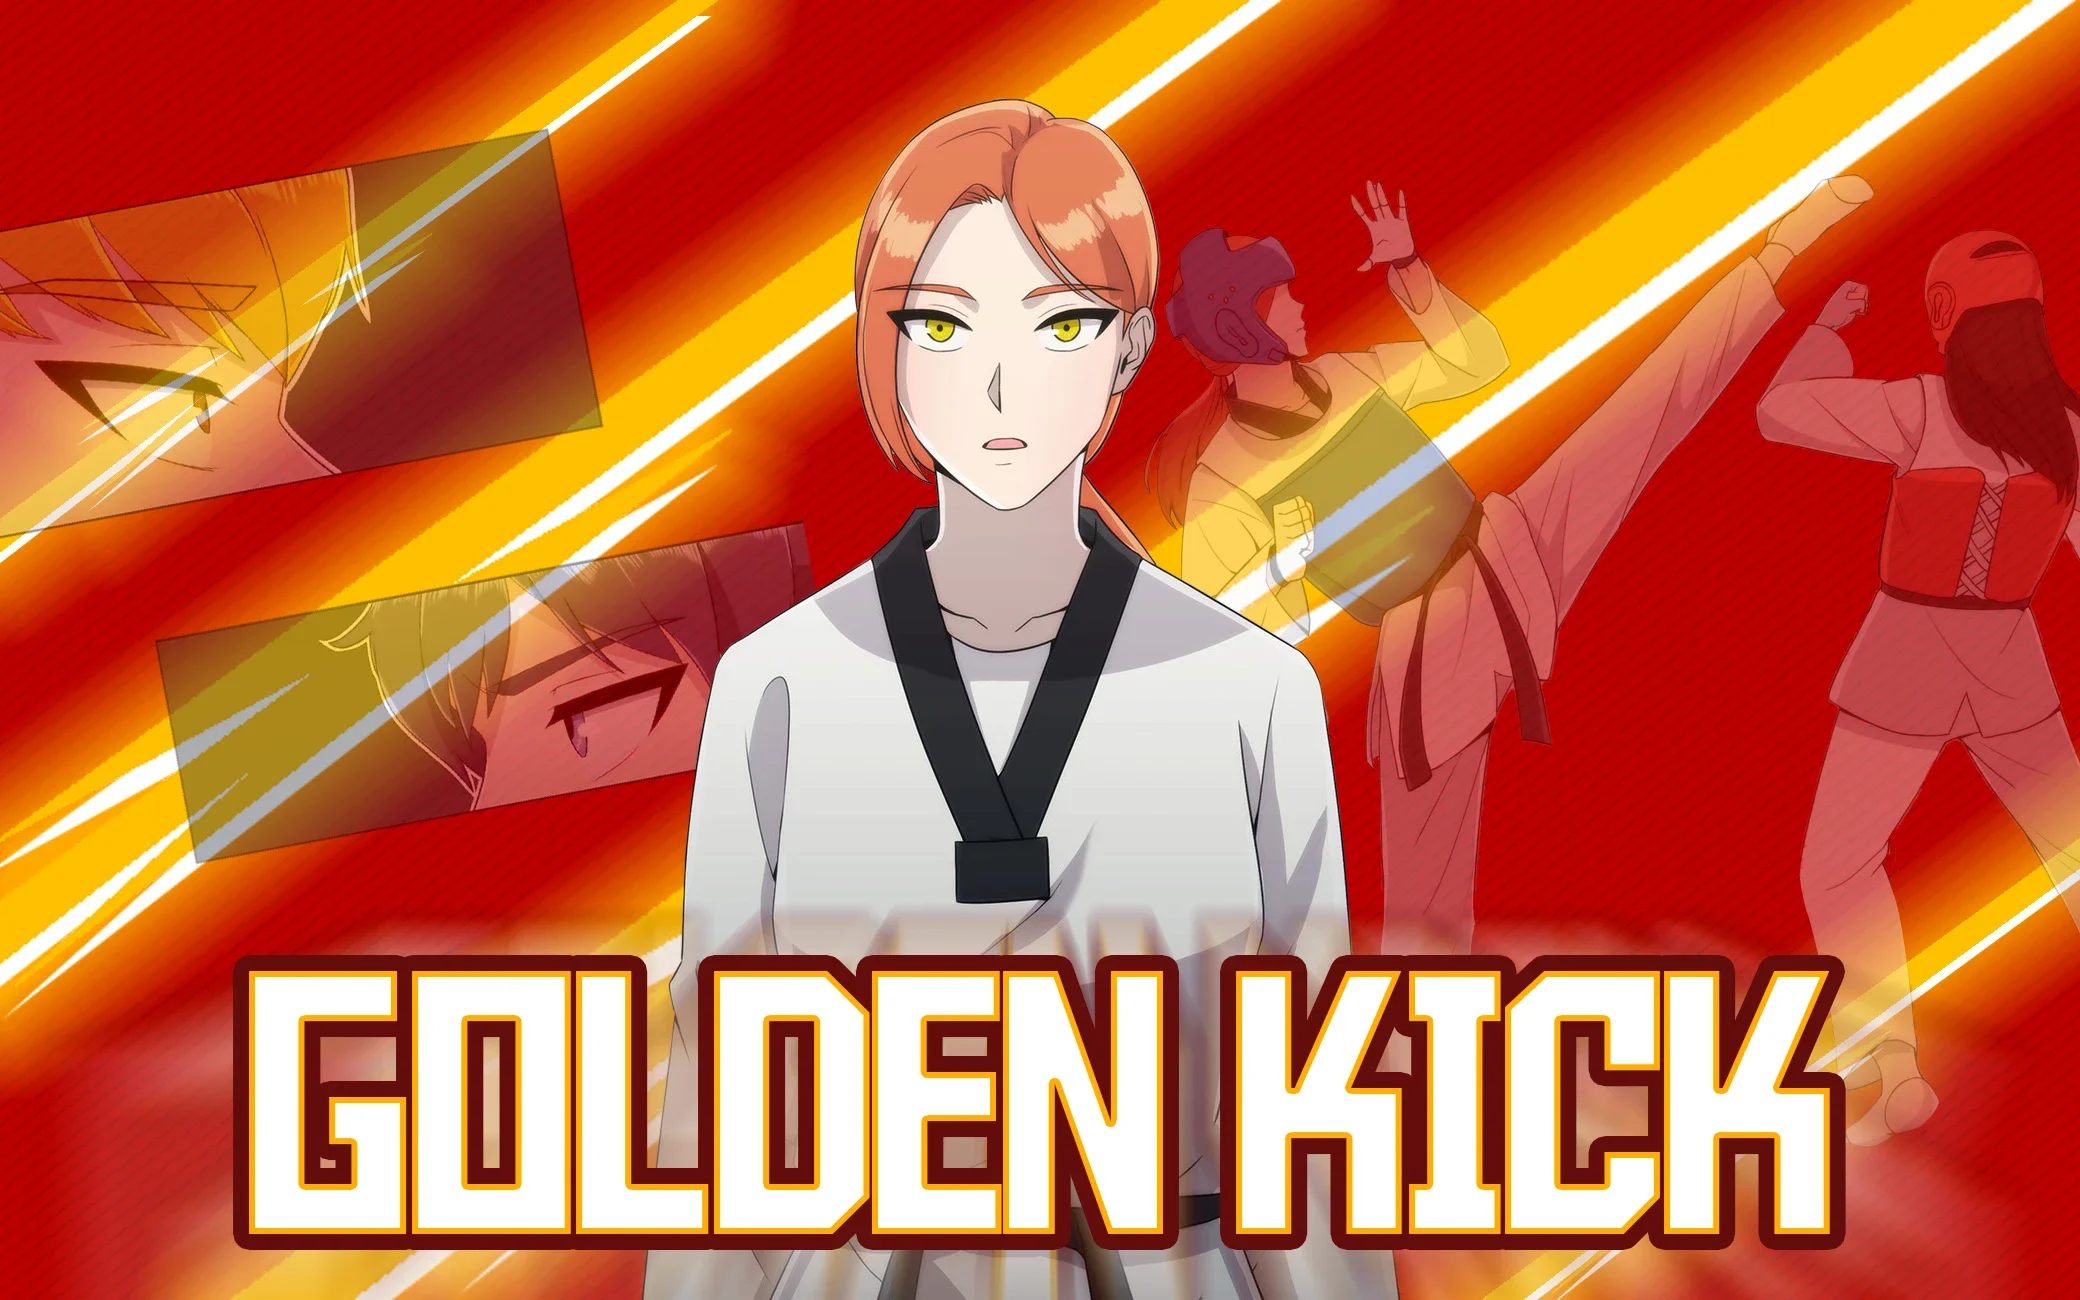 The Golden Kick